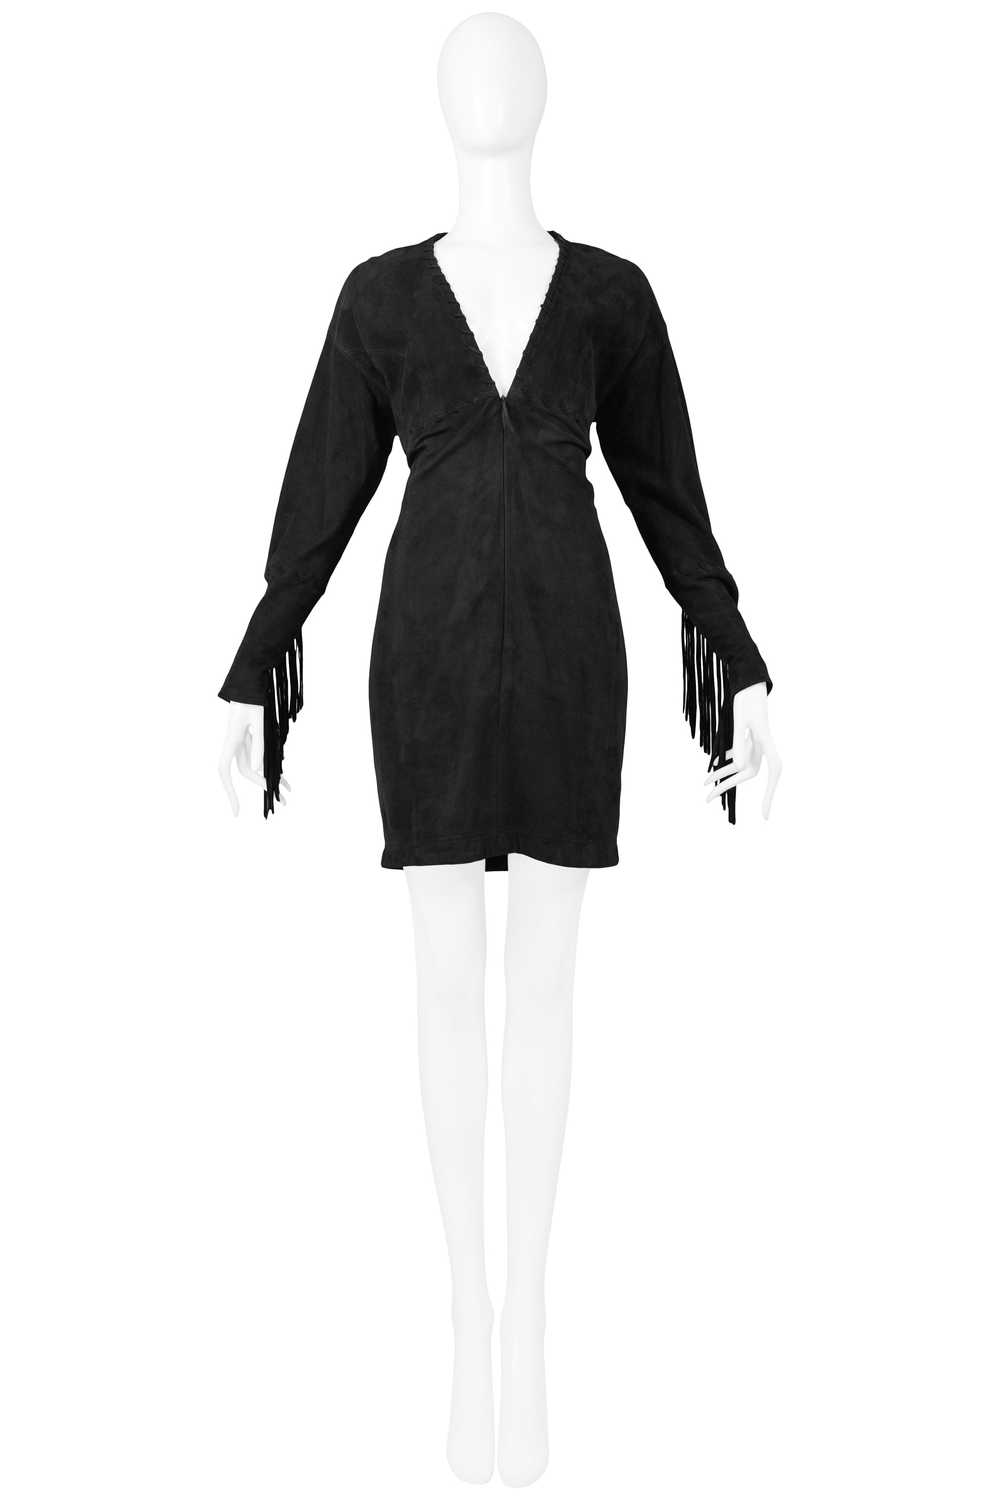 ISAAC MIZRAHI BLACK LEATHER SUEDE DRESS 1989 - image 1